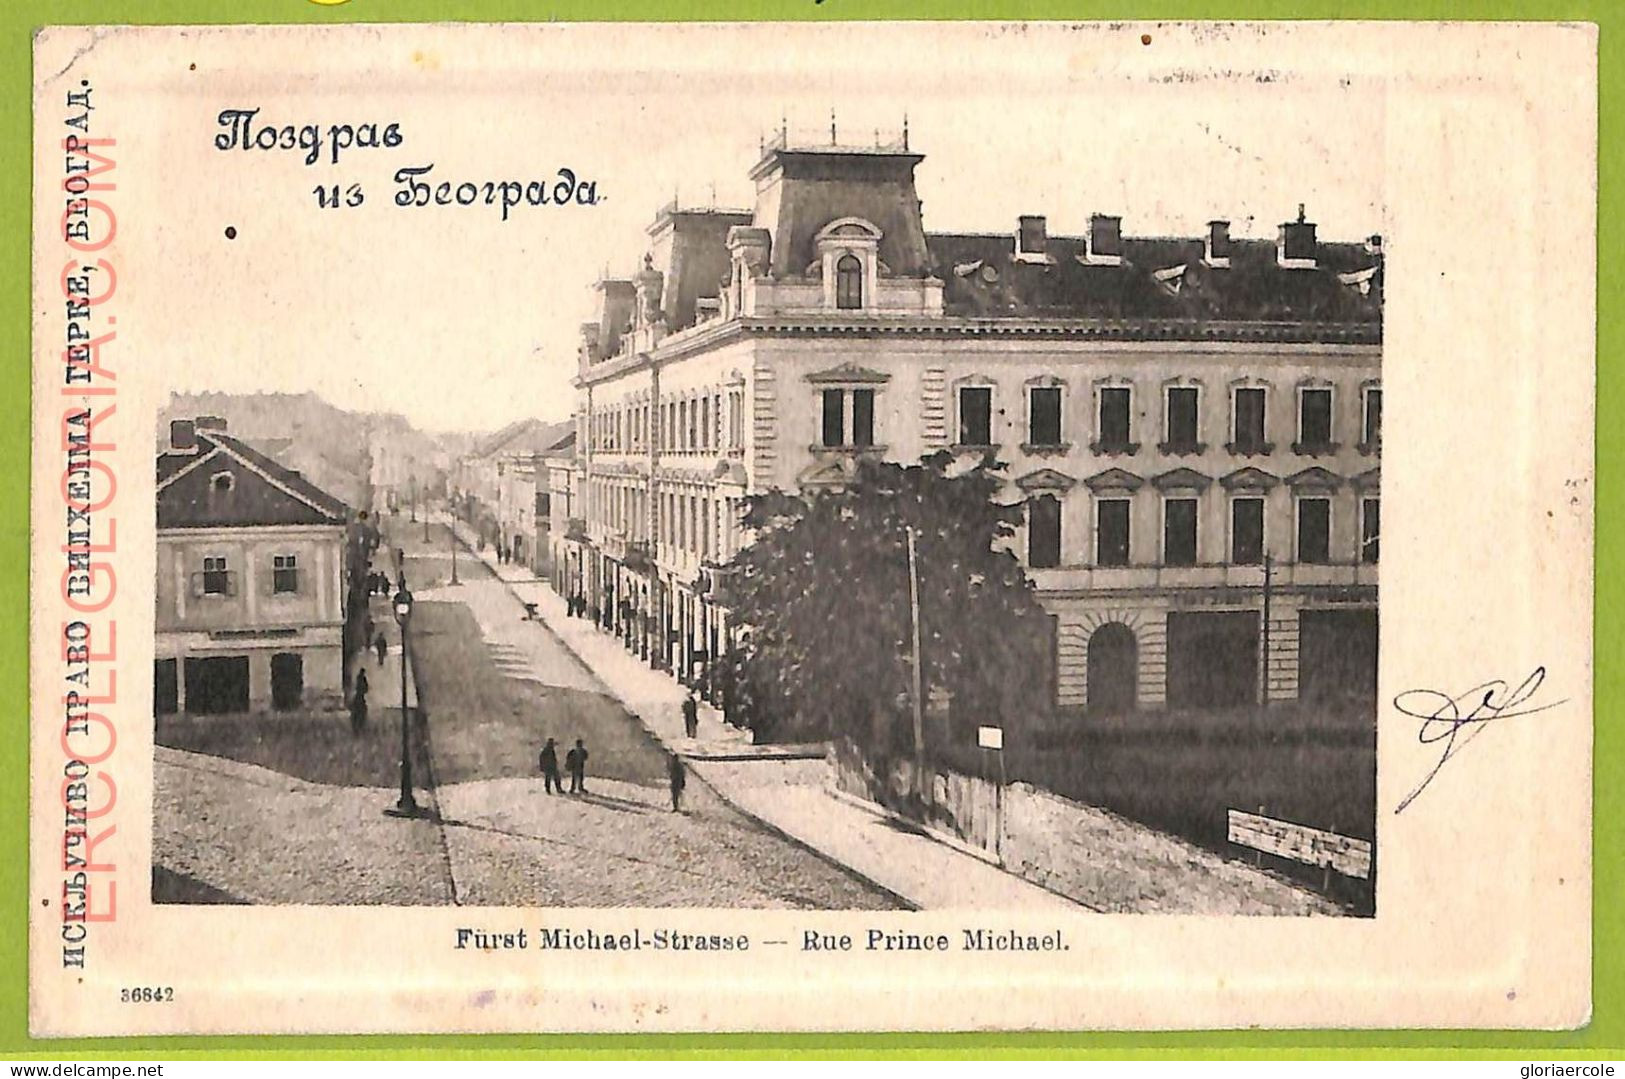 Ae8950 - Ansichtskarten VINTAGE POSTCARD - SERBIA - Belgrade Бео́град - Serbien